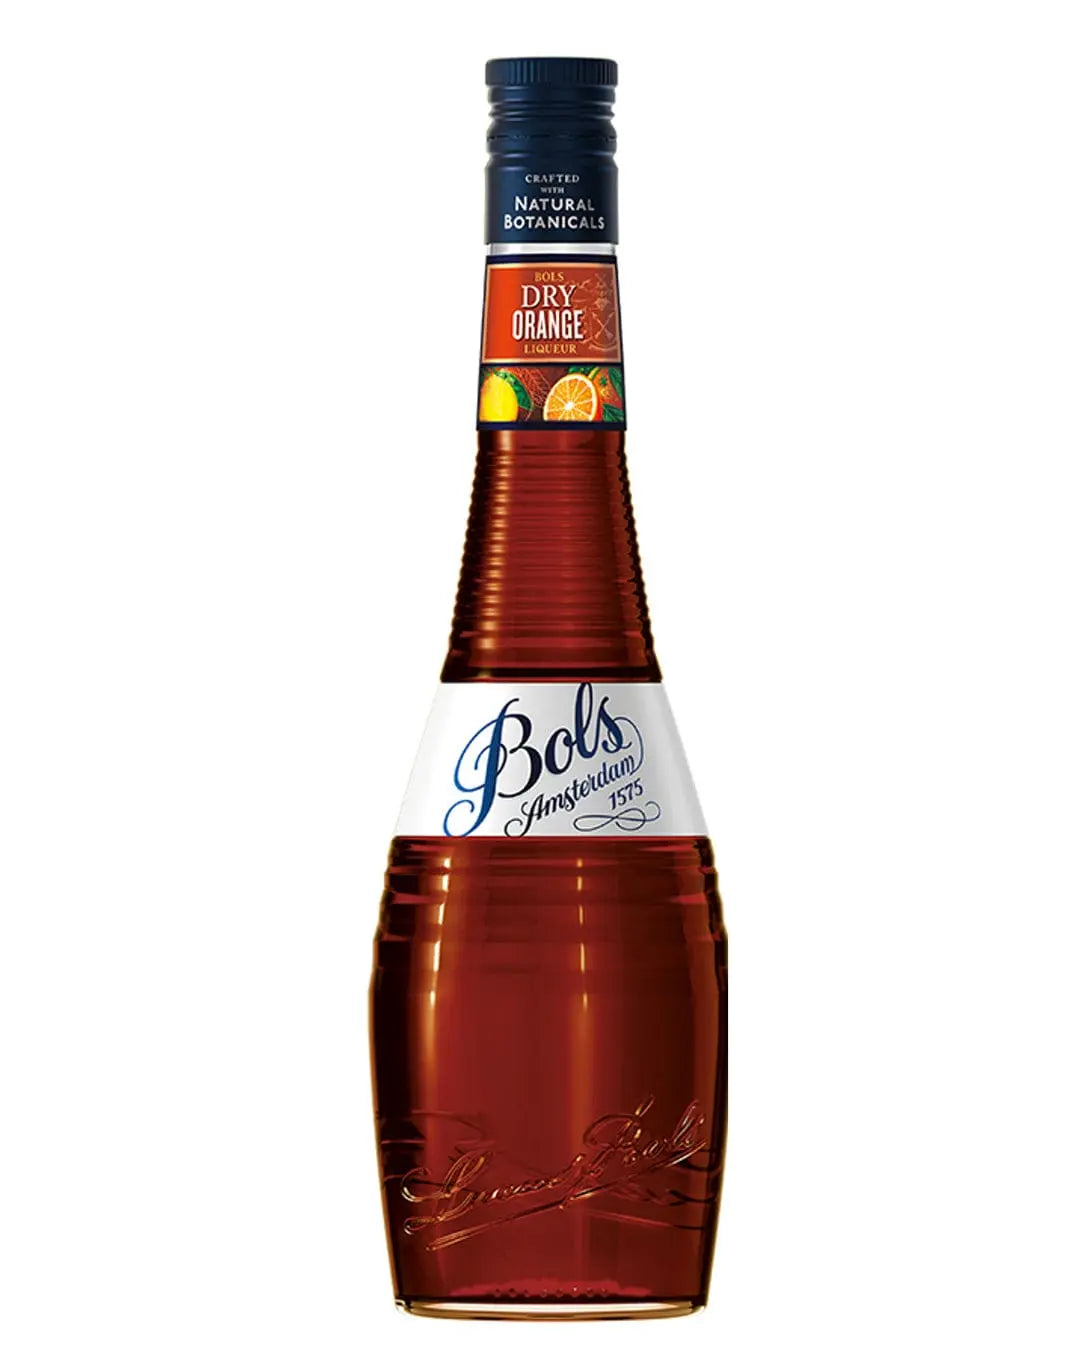 Bols Dry Orange Curacao Liqueur, 50 cl Liqueurs & Other Spirits 8716000964892